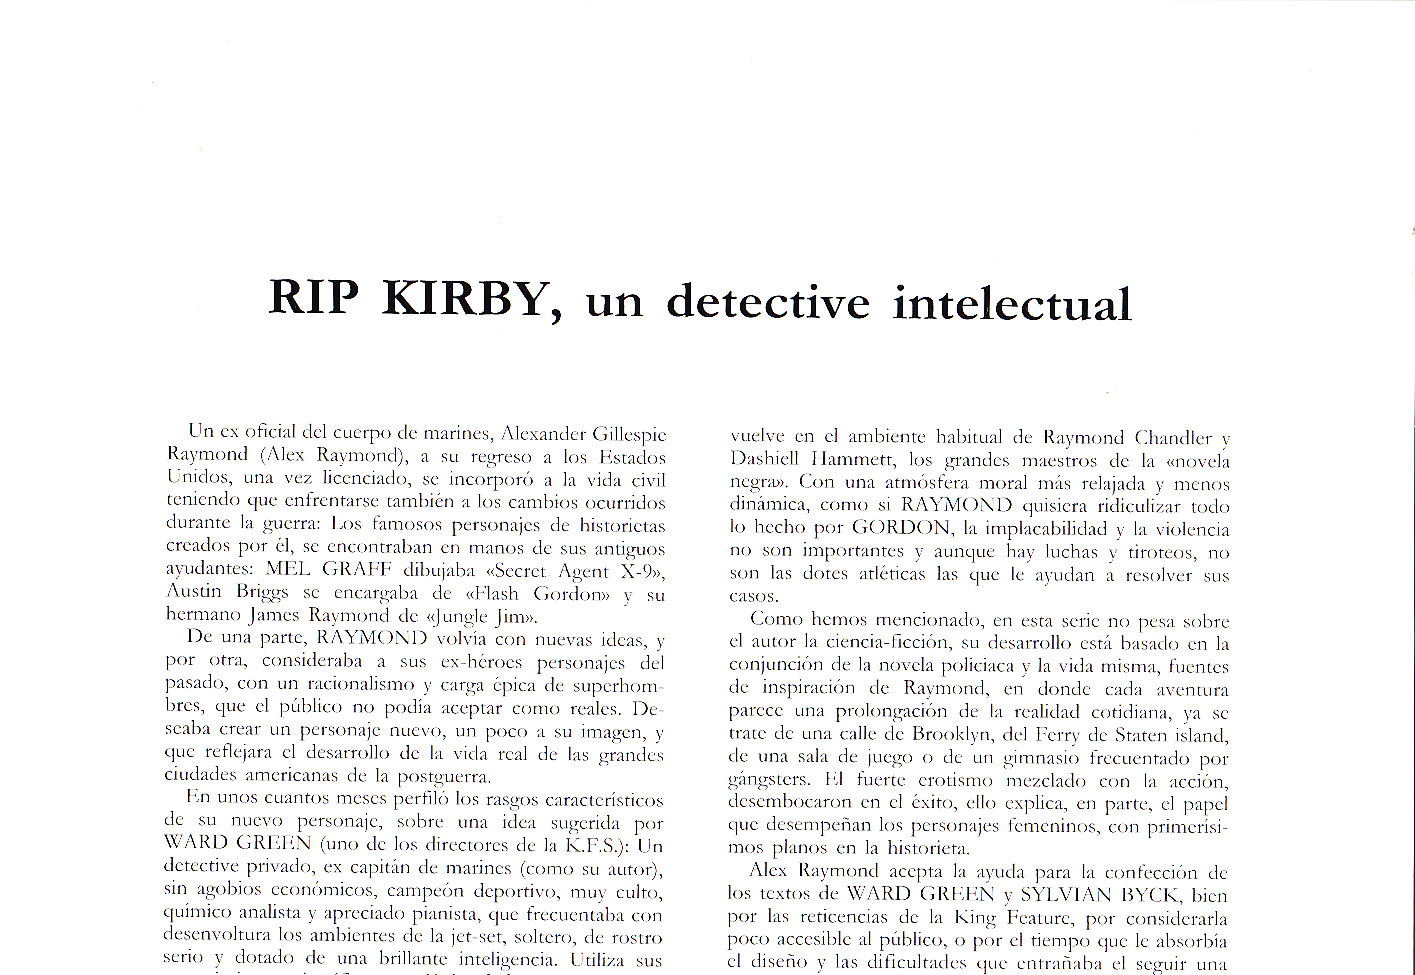 RIP KIRBY EN EUROCLUB MAGERIT.